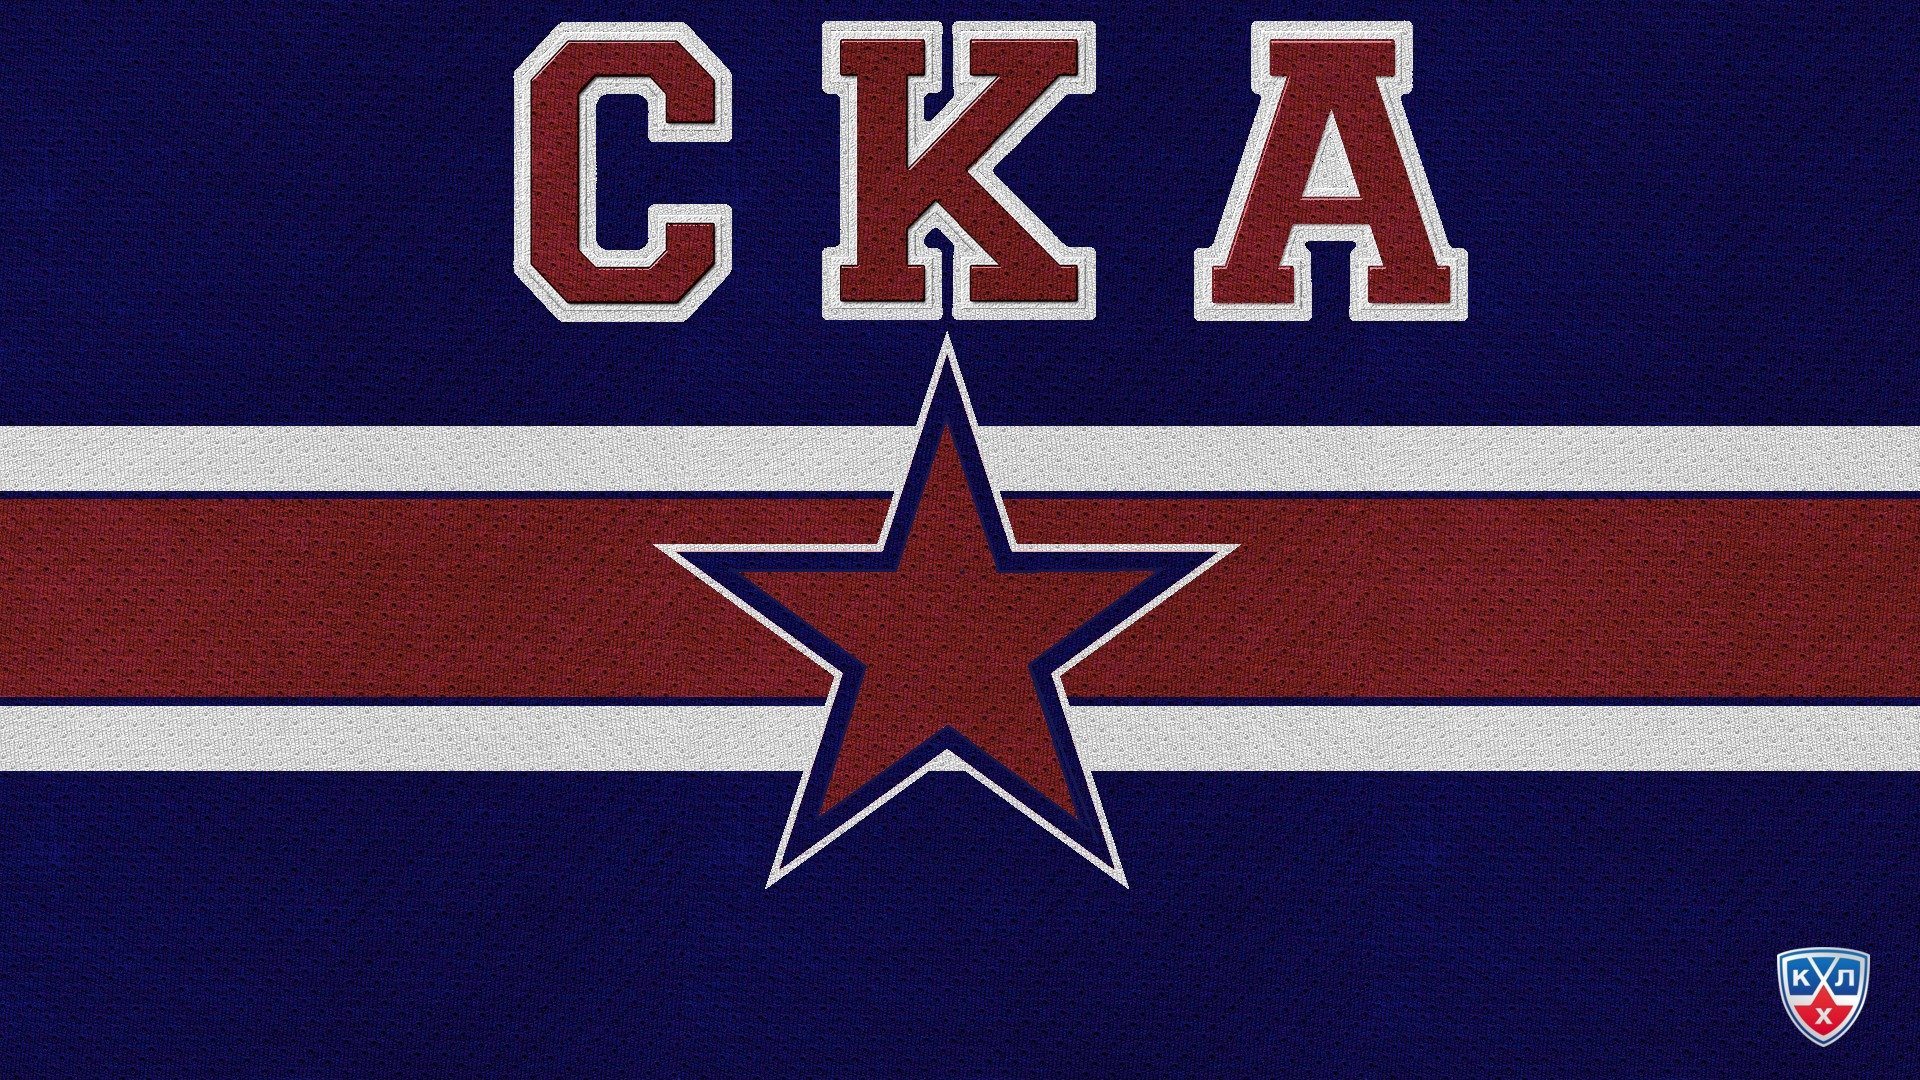 Обои на телефон хк. Логотип хк СКА Санкт-Петербург. СКА хоккейный клуб эмблема. Картинки хоккейный клуб СКА. Хоккейный клуб ЦСКА лого.